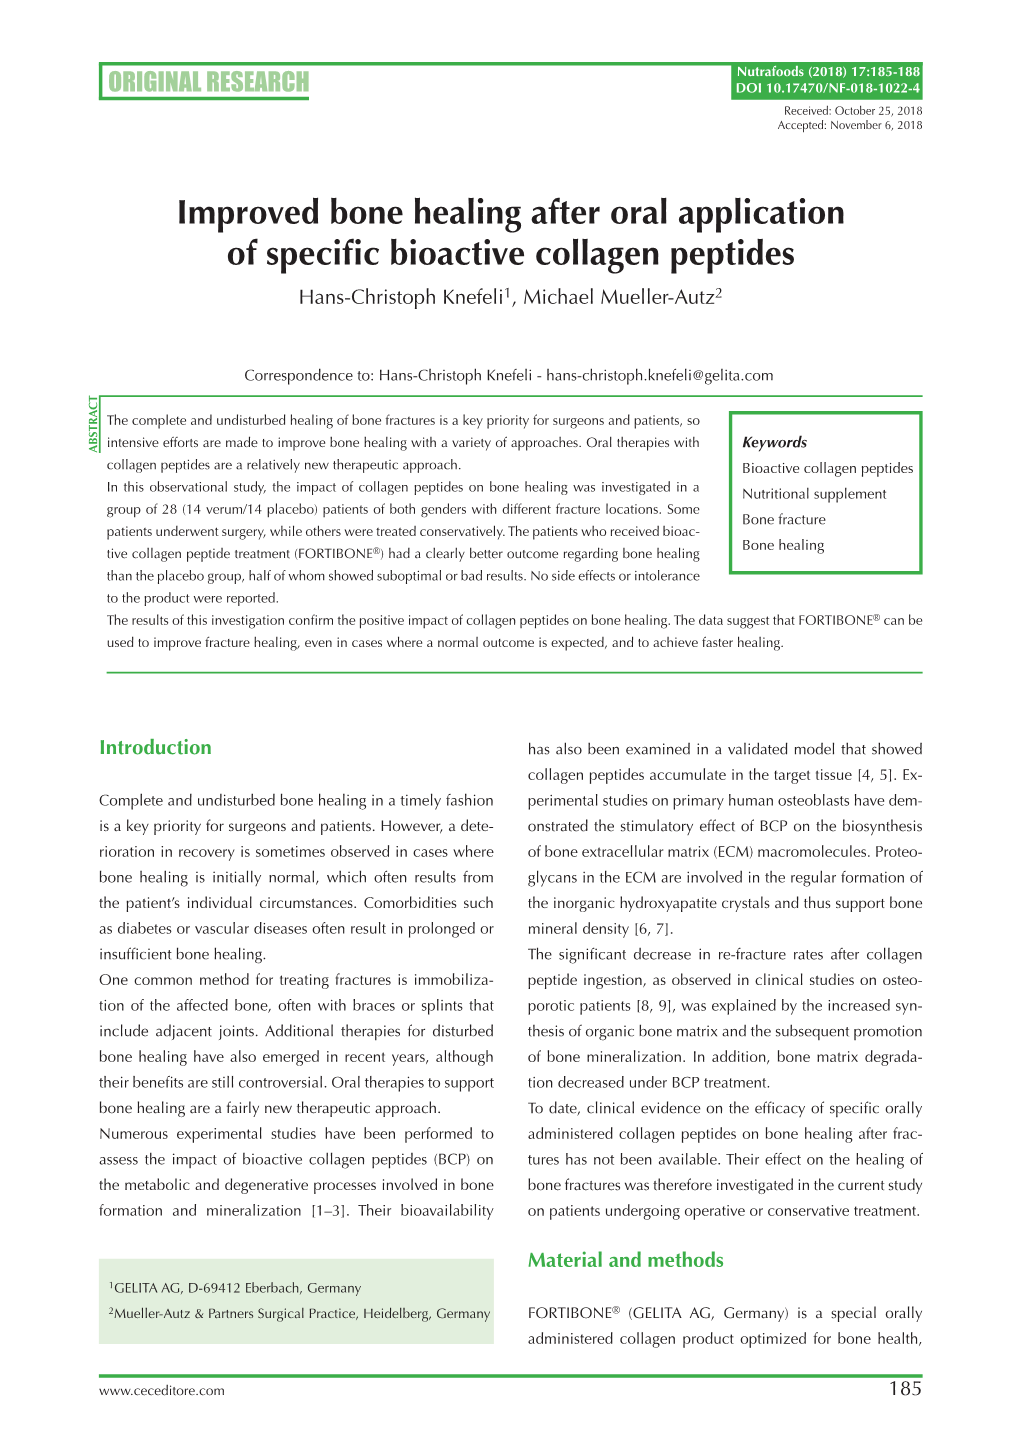 Improved Bone Healing After Oral Application of Specific Bioactive Collagen Peptides Hans-Christoph Knefeli1, Michael Mueller-Autz2